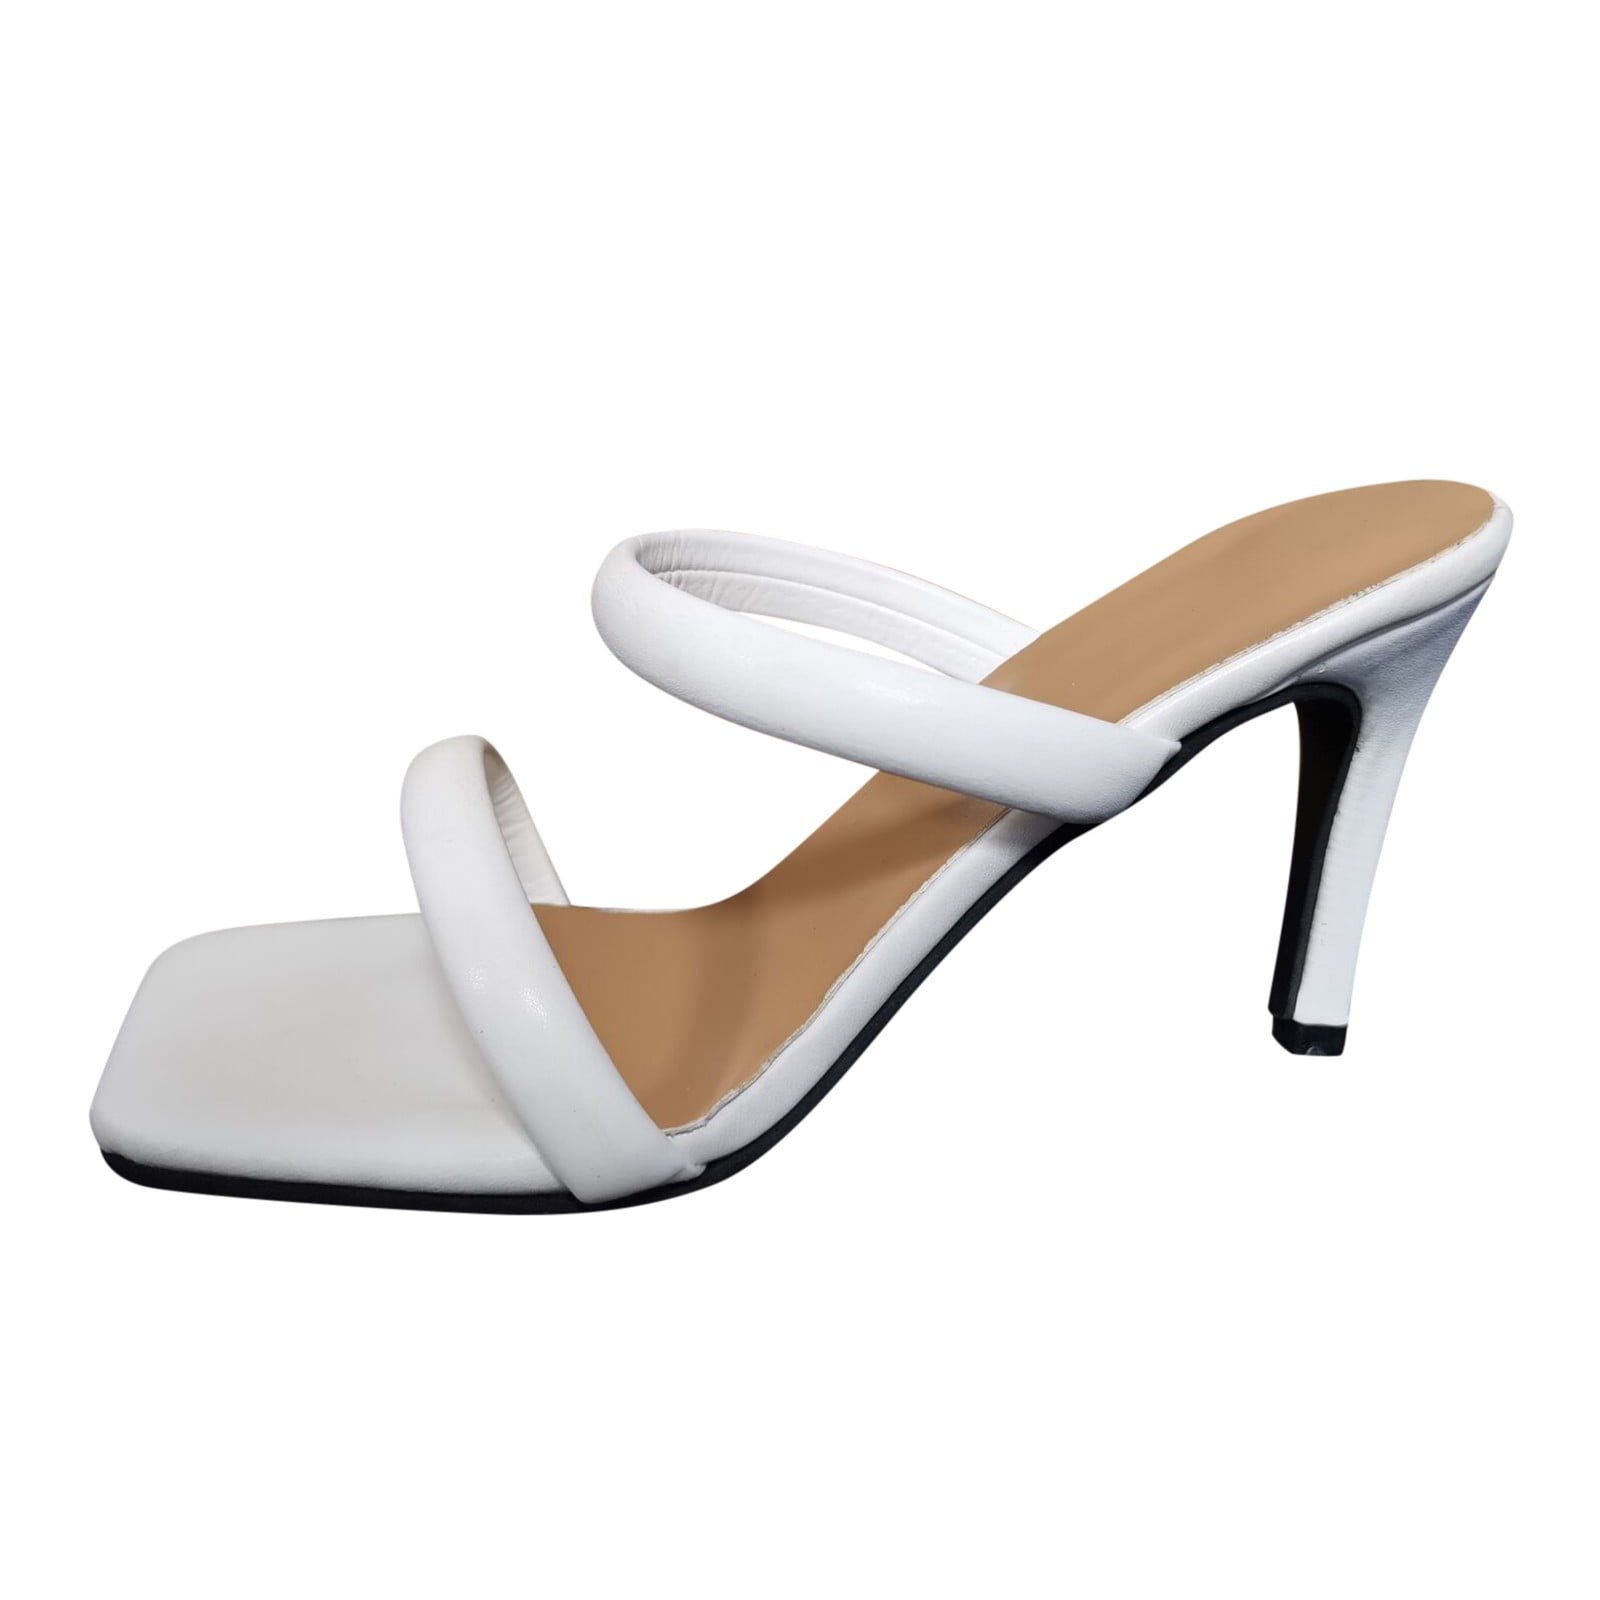 MIA GIO - Zapatos de moda para mujer, blanco, (White/Off White), 6